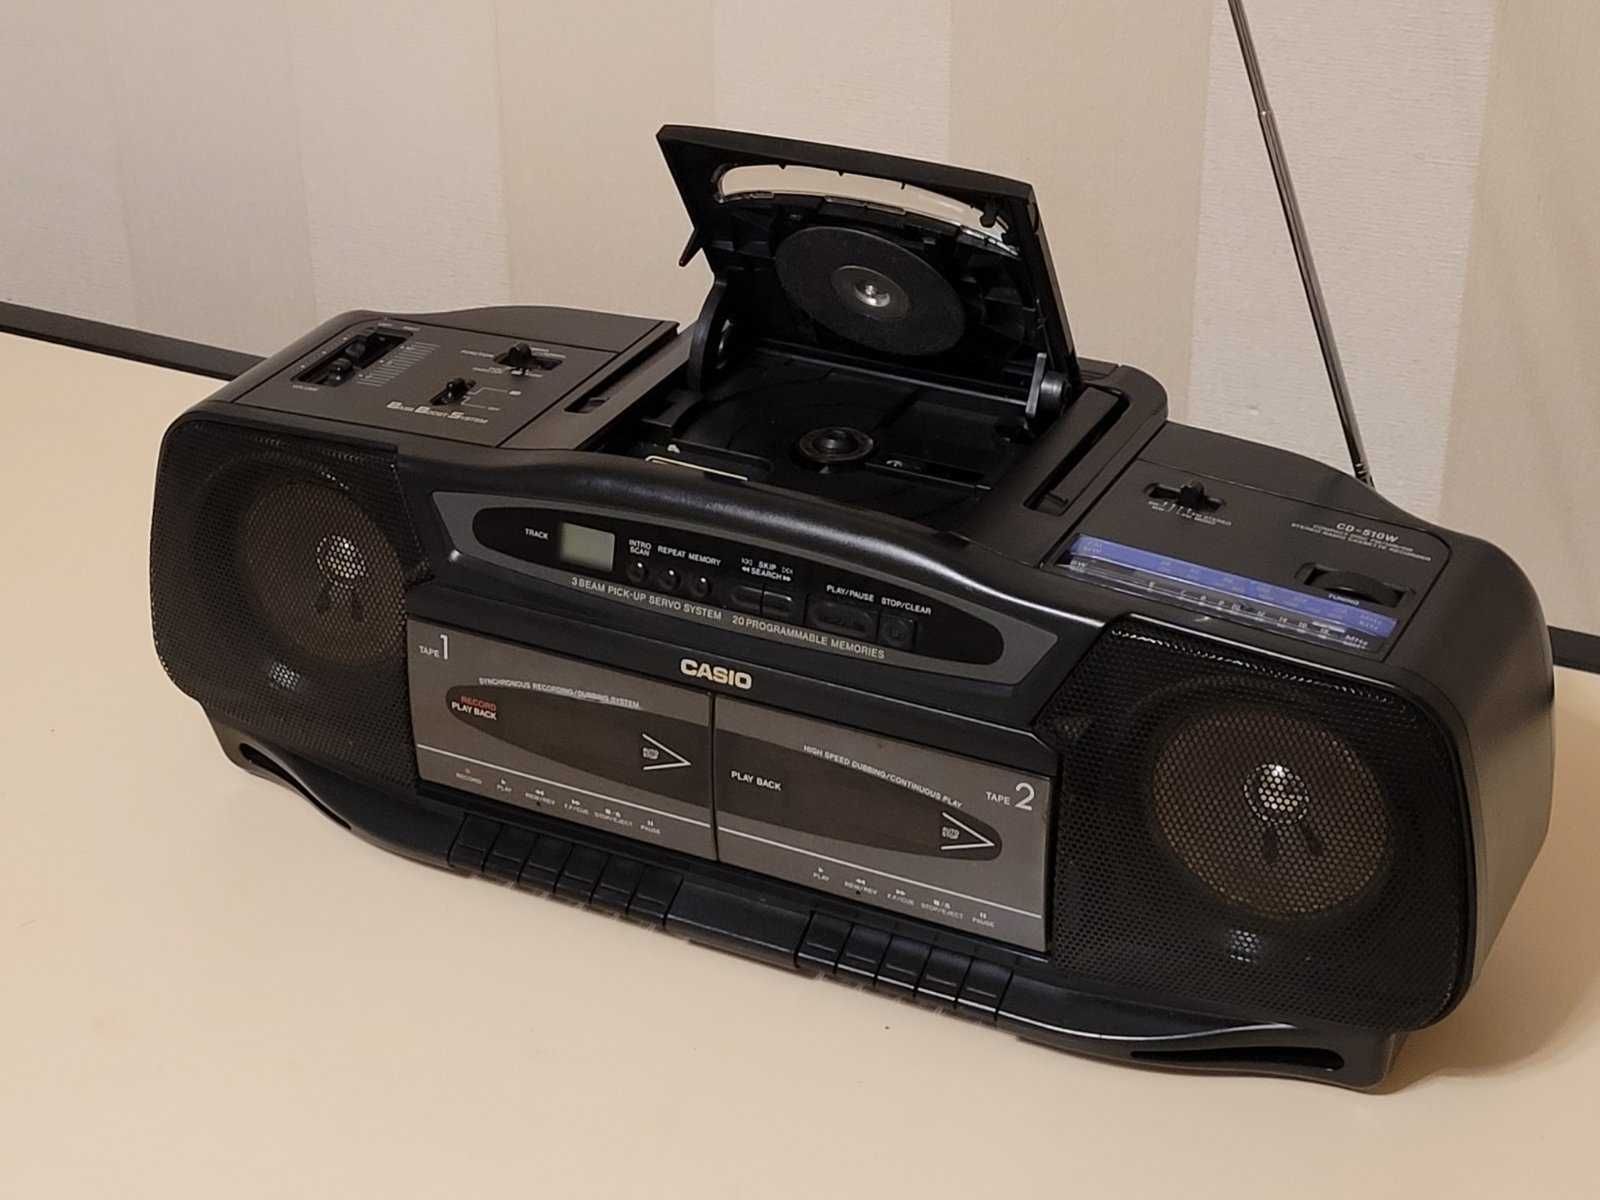 CASIO CD 510W compact disc stereo radio cassette recorder